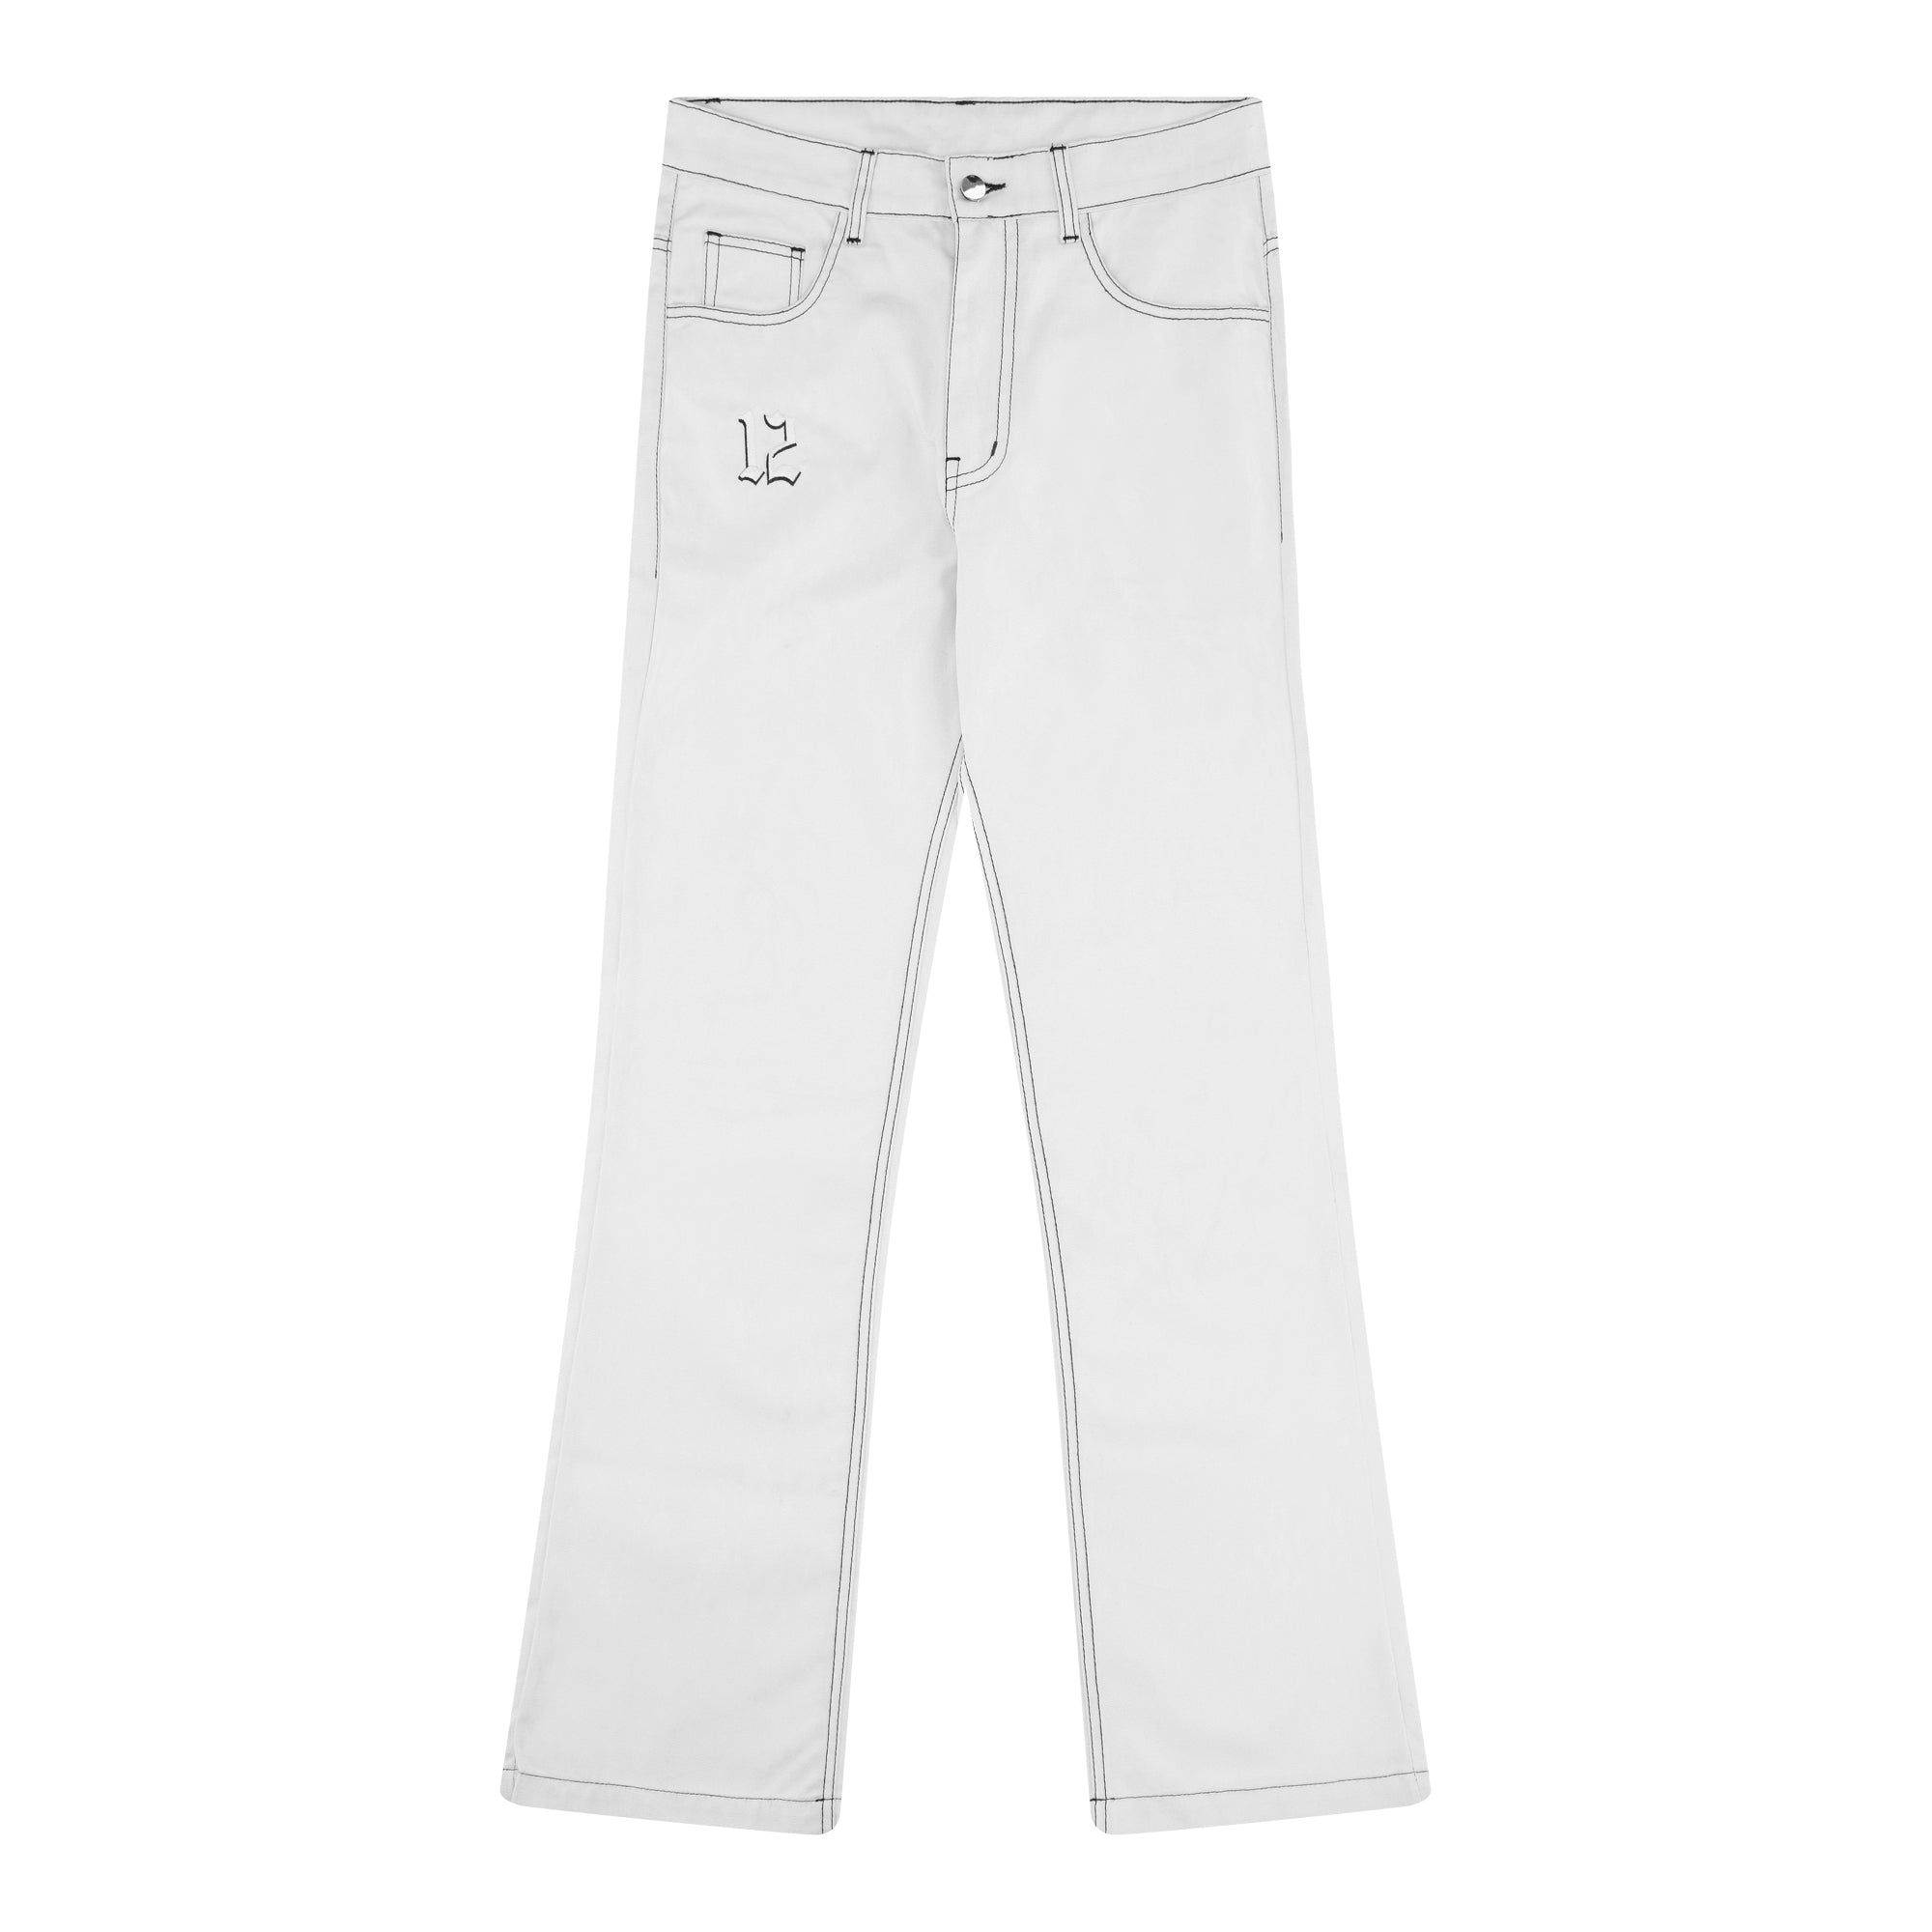 ChainWear Jeans White on White